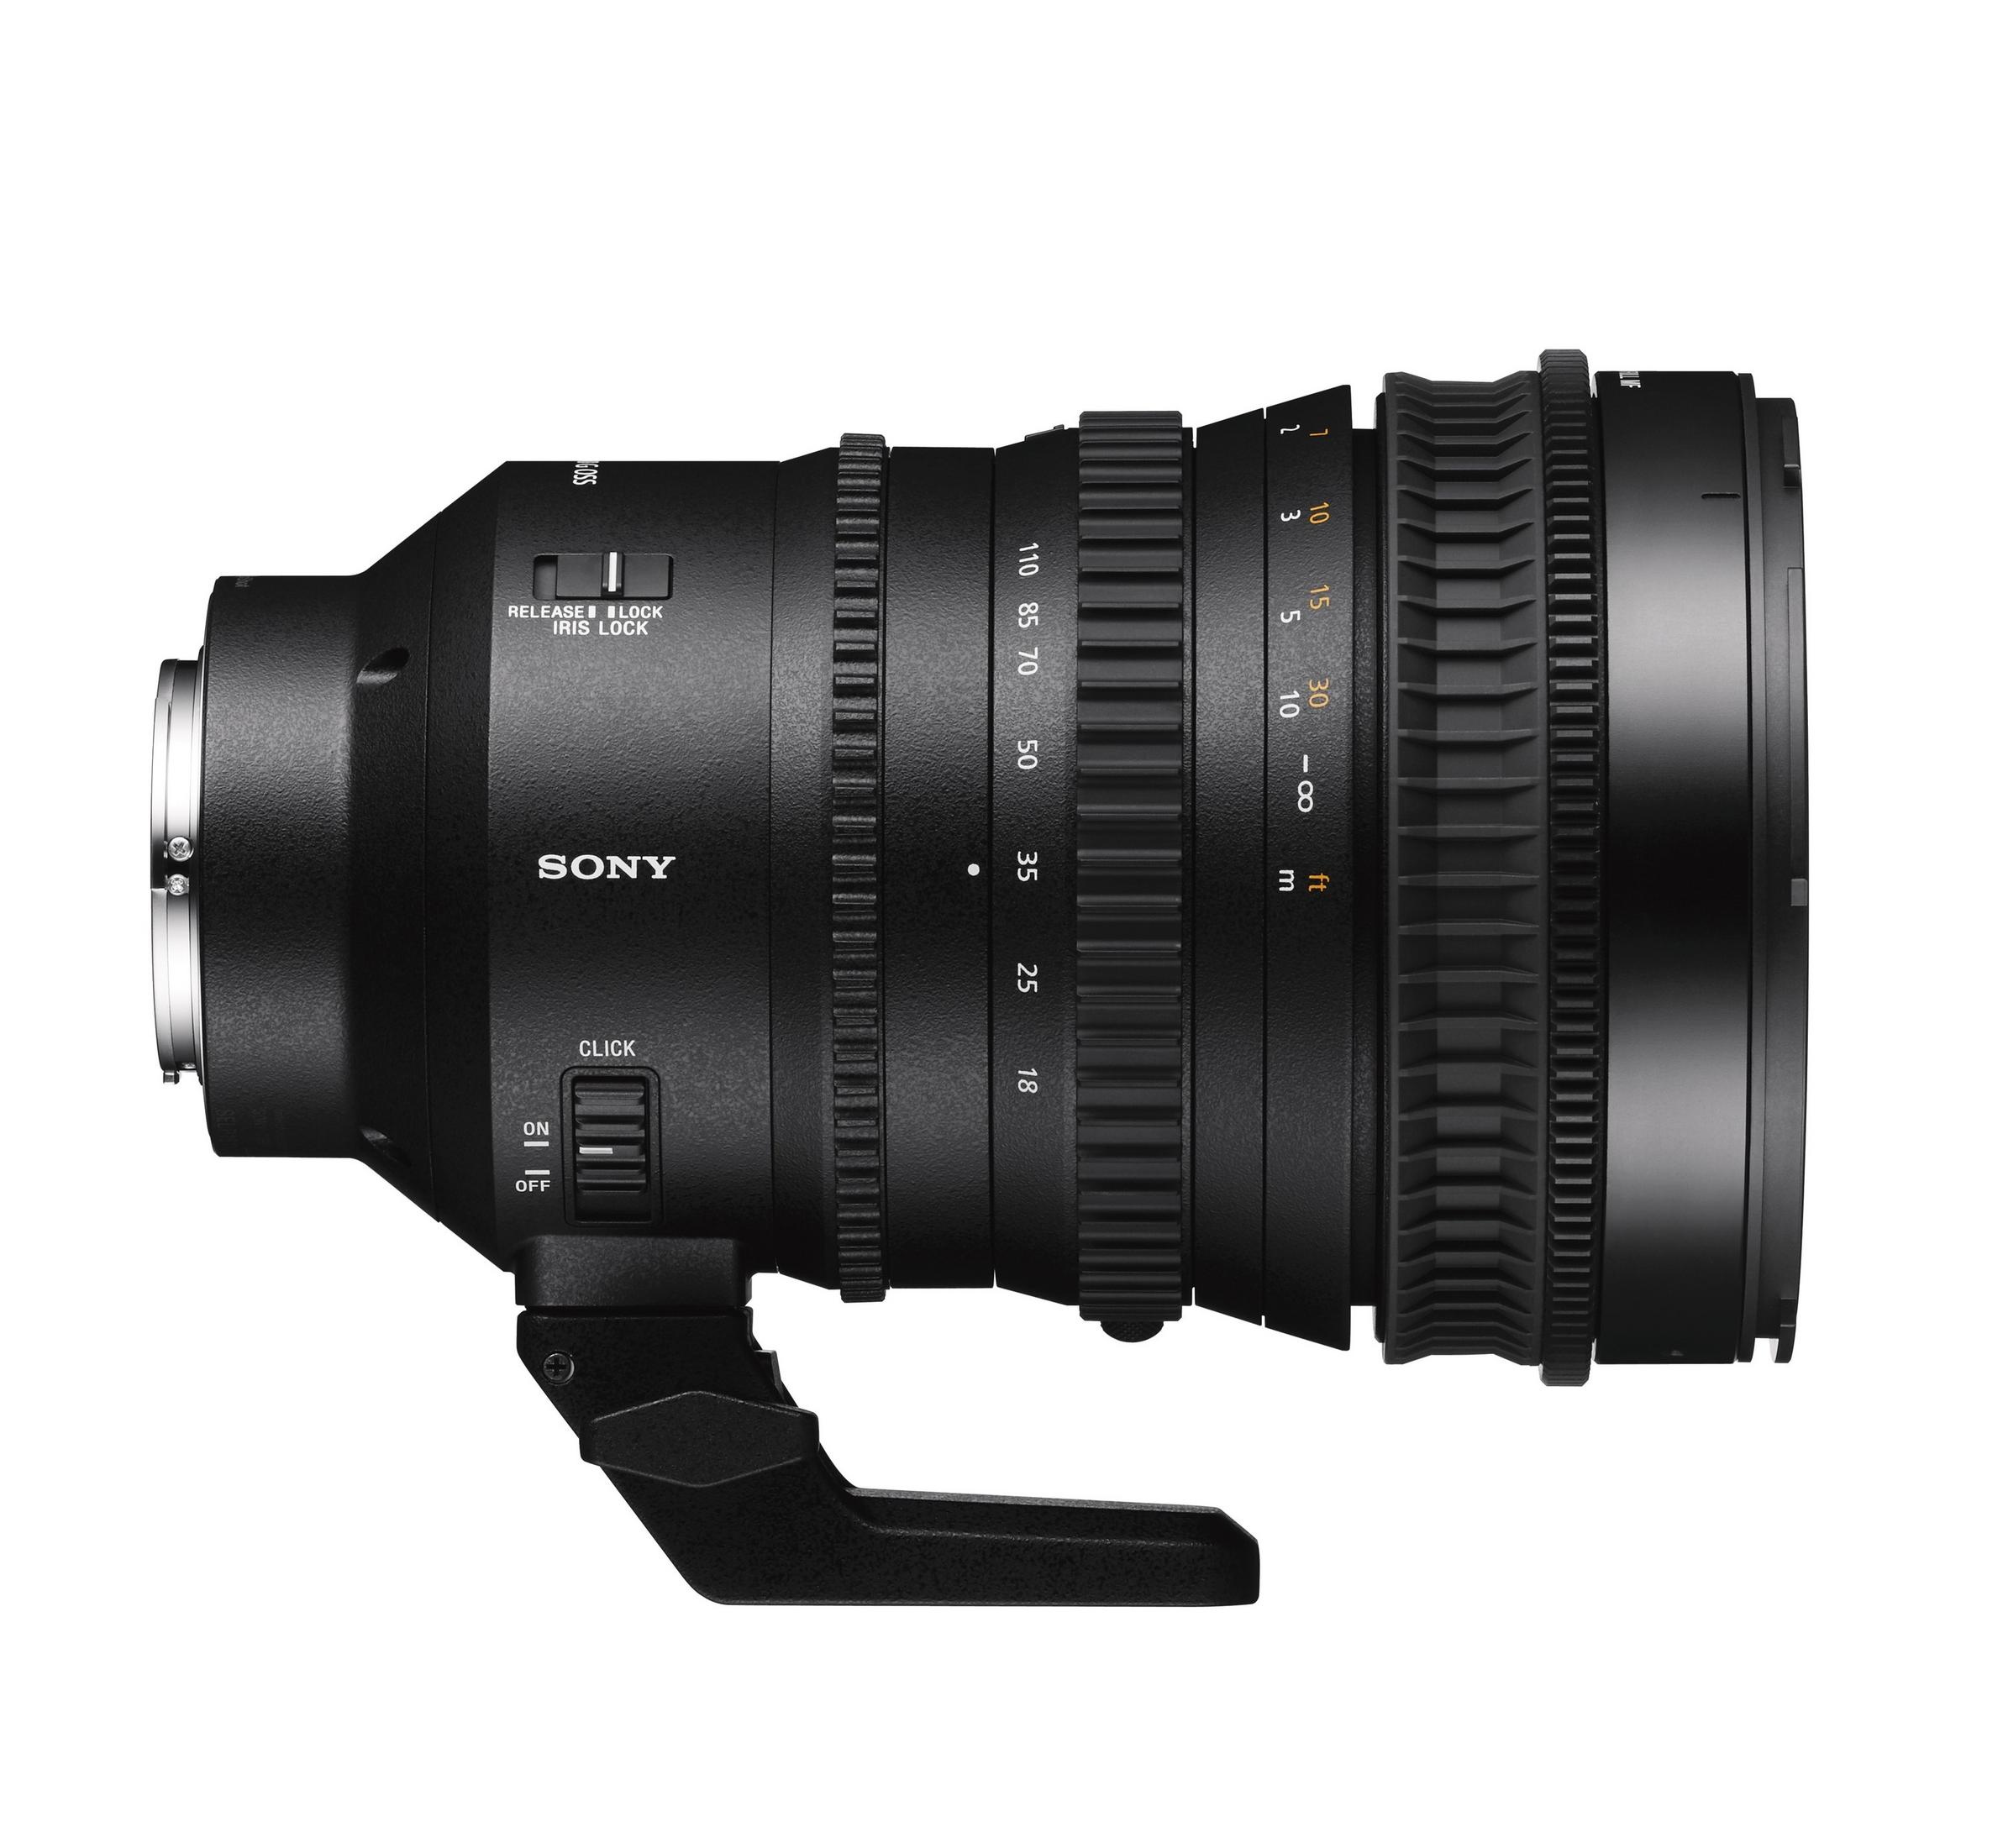 SONY SEL-P 18110 G 18-110MM (F4) - E-Mount, Sony f/4.0 110 POWERZOOM 18 G-OBJEKTI Blende, Circulare (Objektiv Schwarz) für mm mm G-Lens, OSS, DMR FE